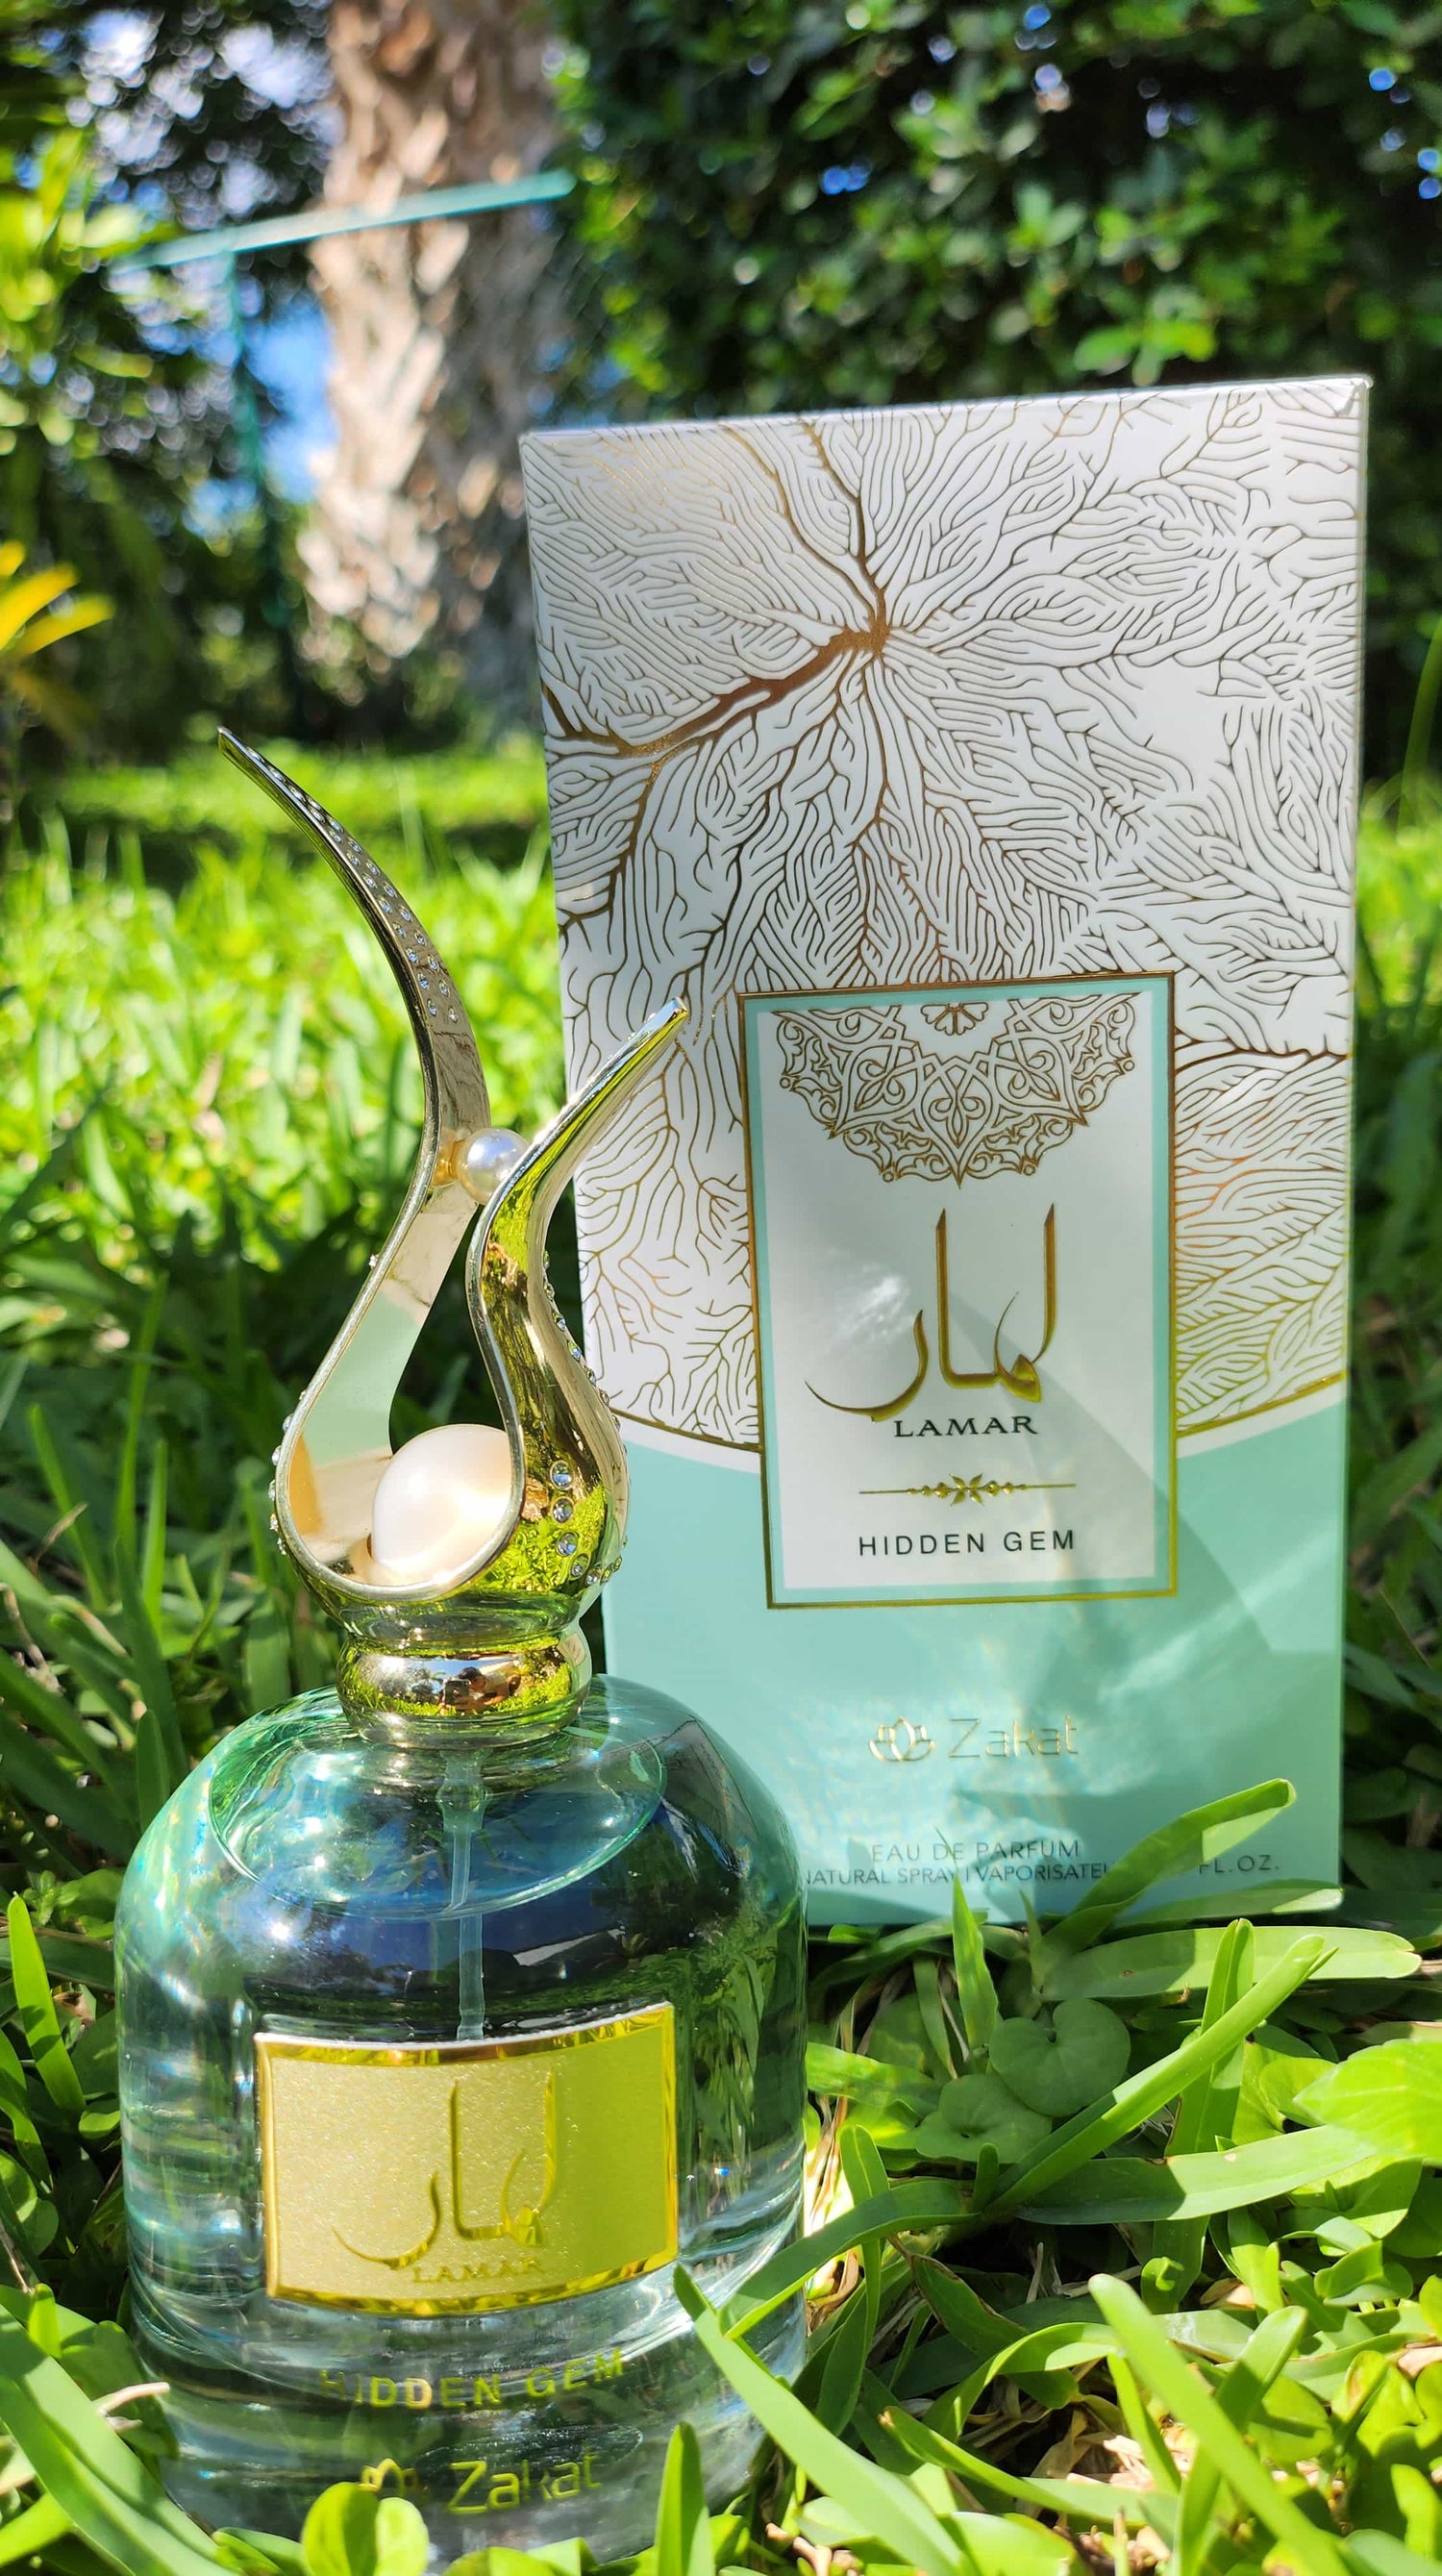 Maison Alhambra Unisex Karat EDP Spray 3.38 oz Fragrances